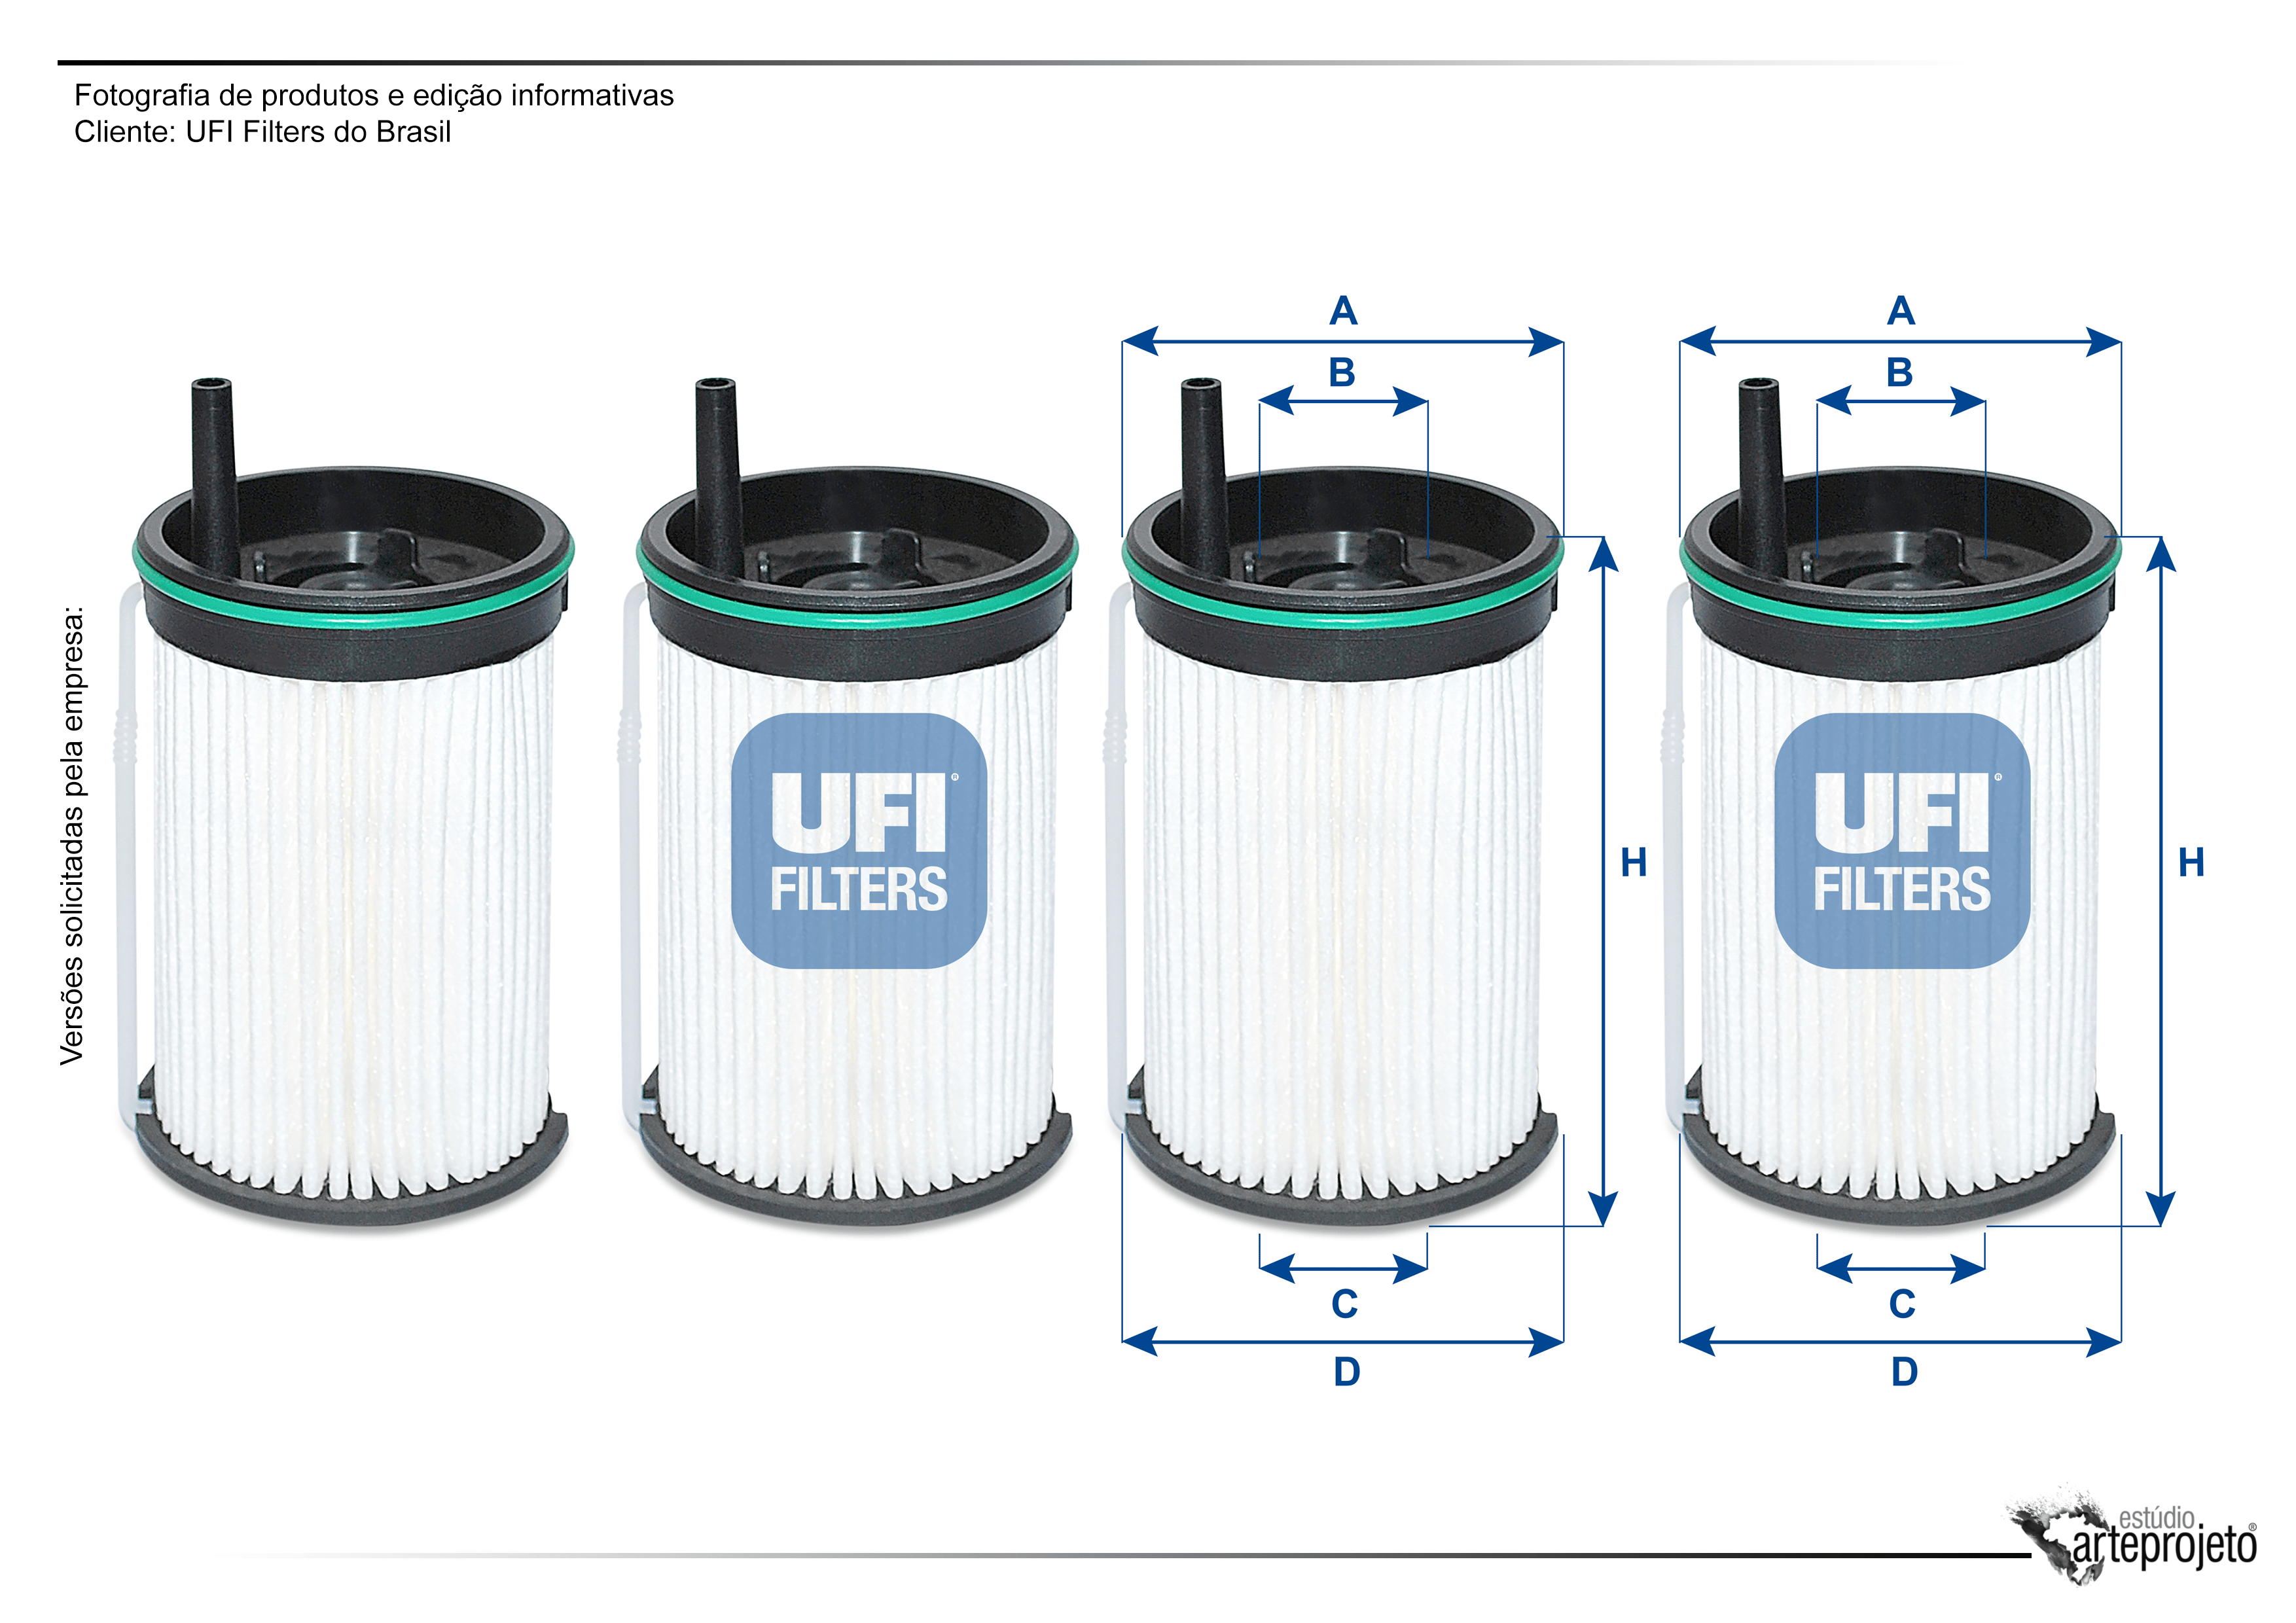 UFI Filters do Brasil